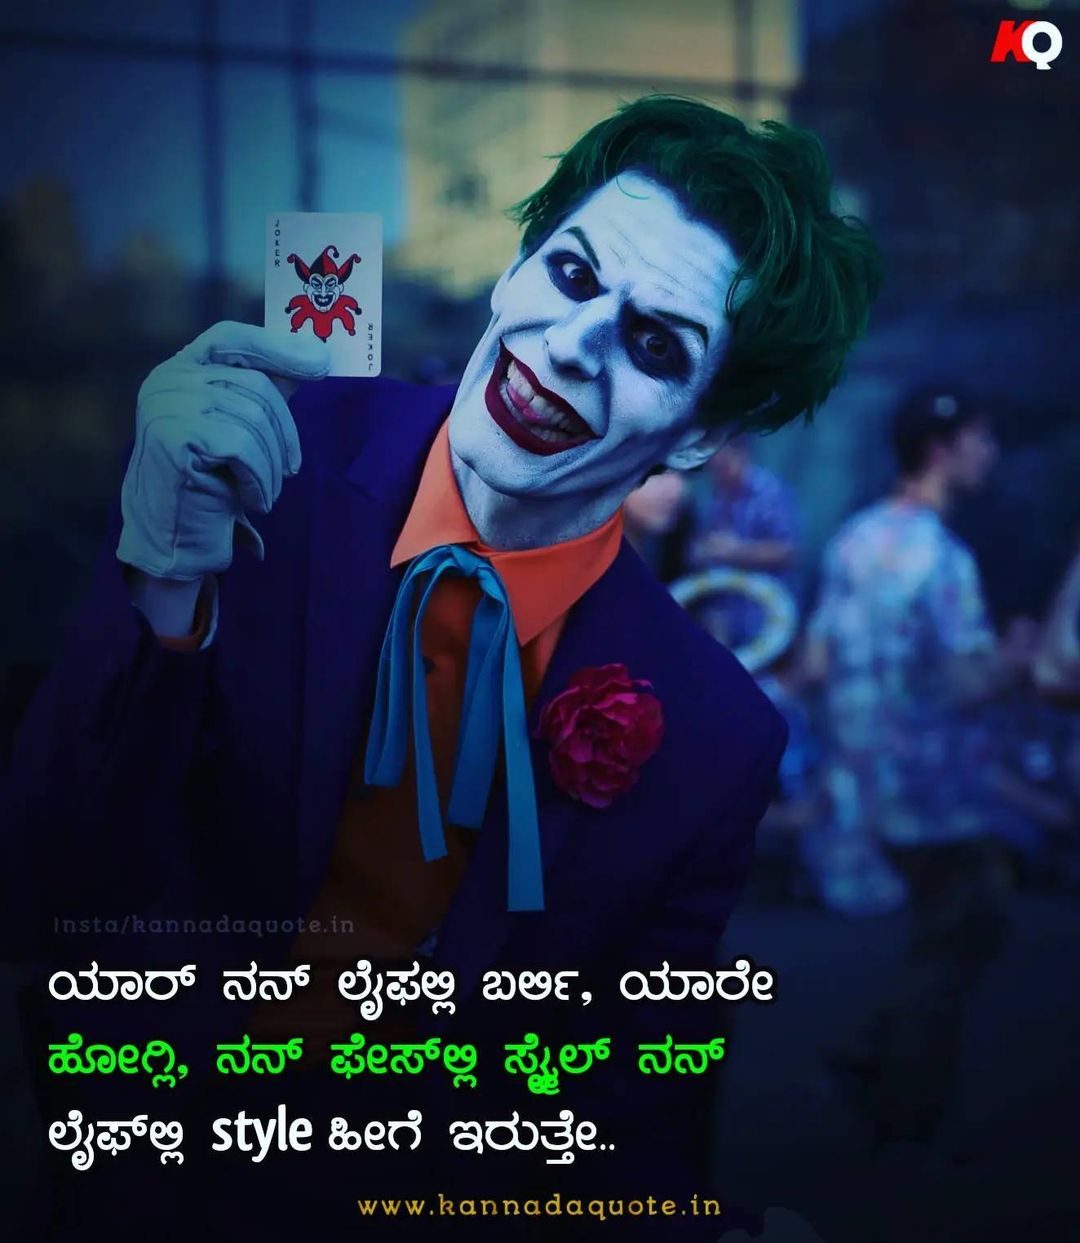 Smile attitude captions for instagram in Kannada